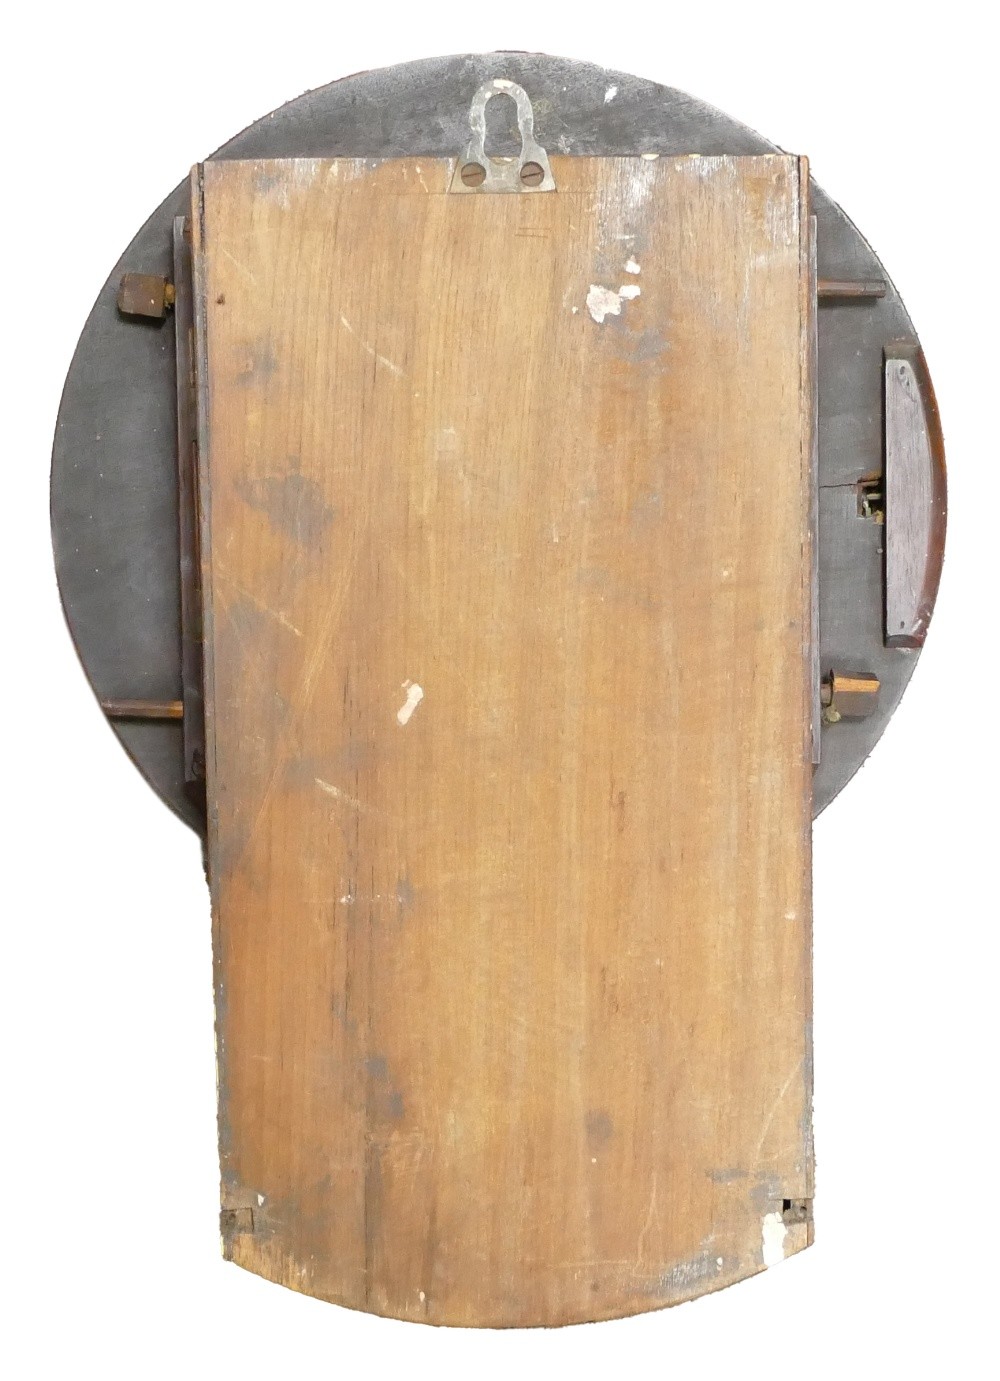 John Barwise 19th century Fusee movement drop dial Mahogany cased wall clock, presentation plaque - Image 4 of 4